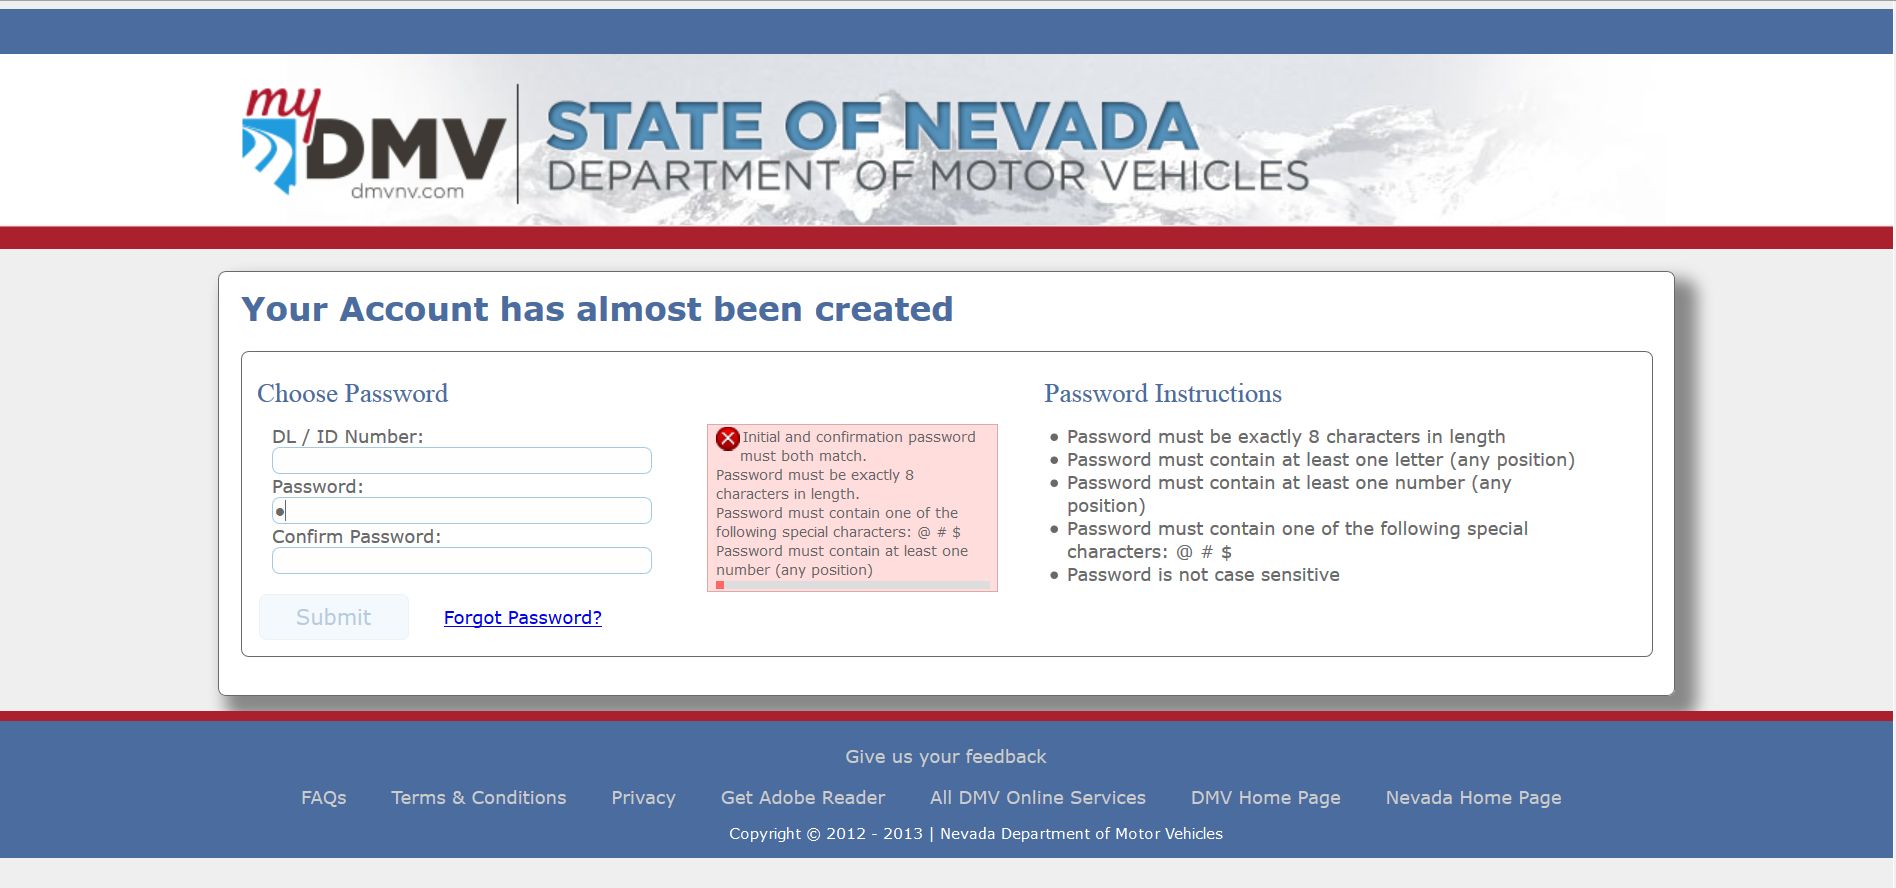 Nevada DMV password restrictions